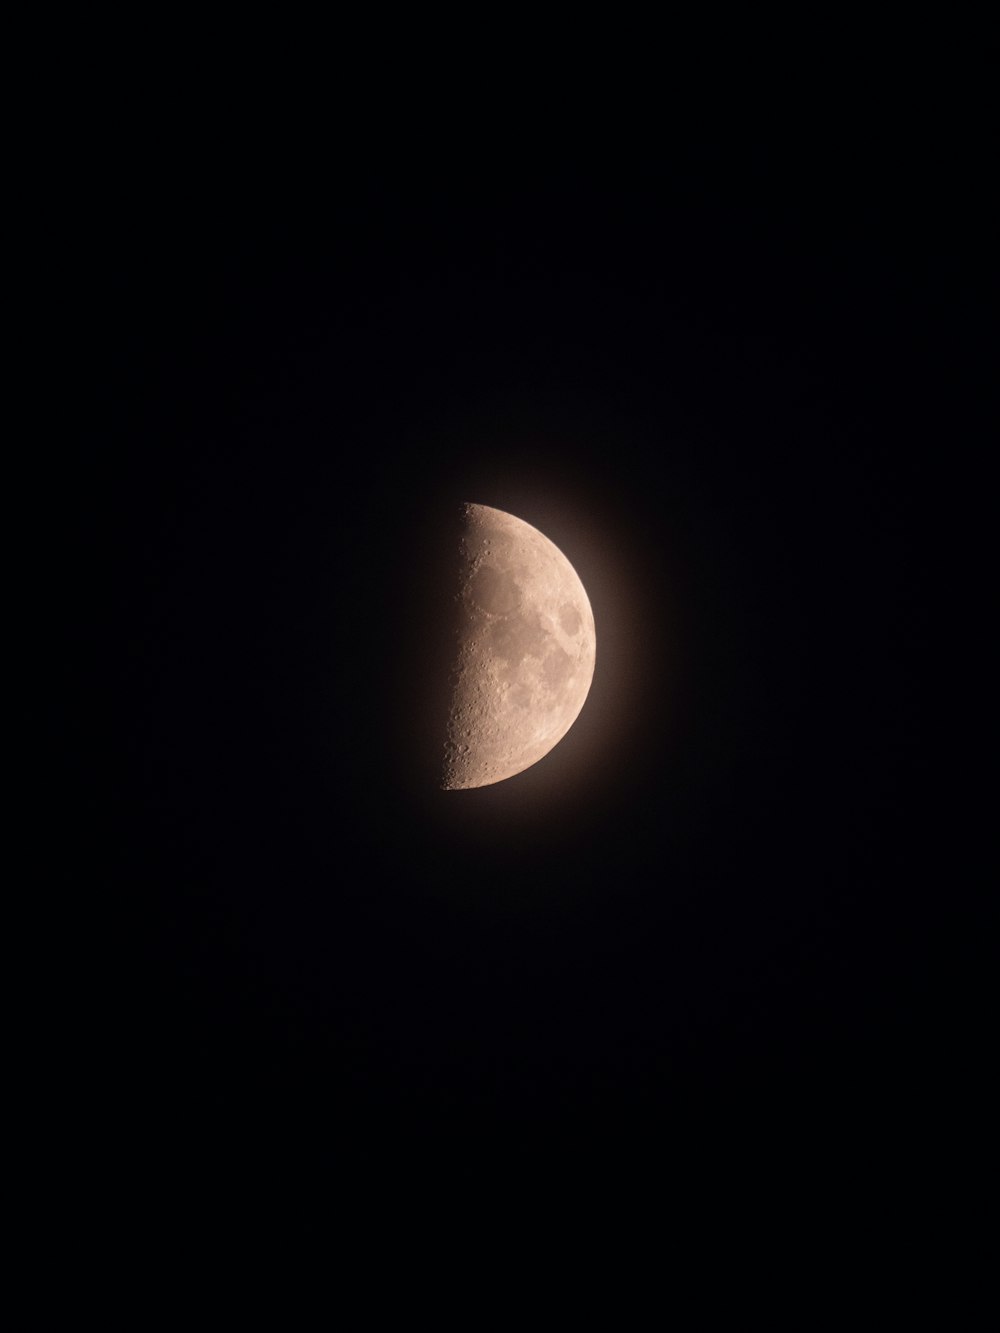 the moon is seen through the dark sky